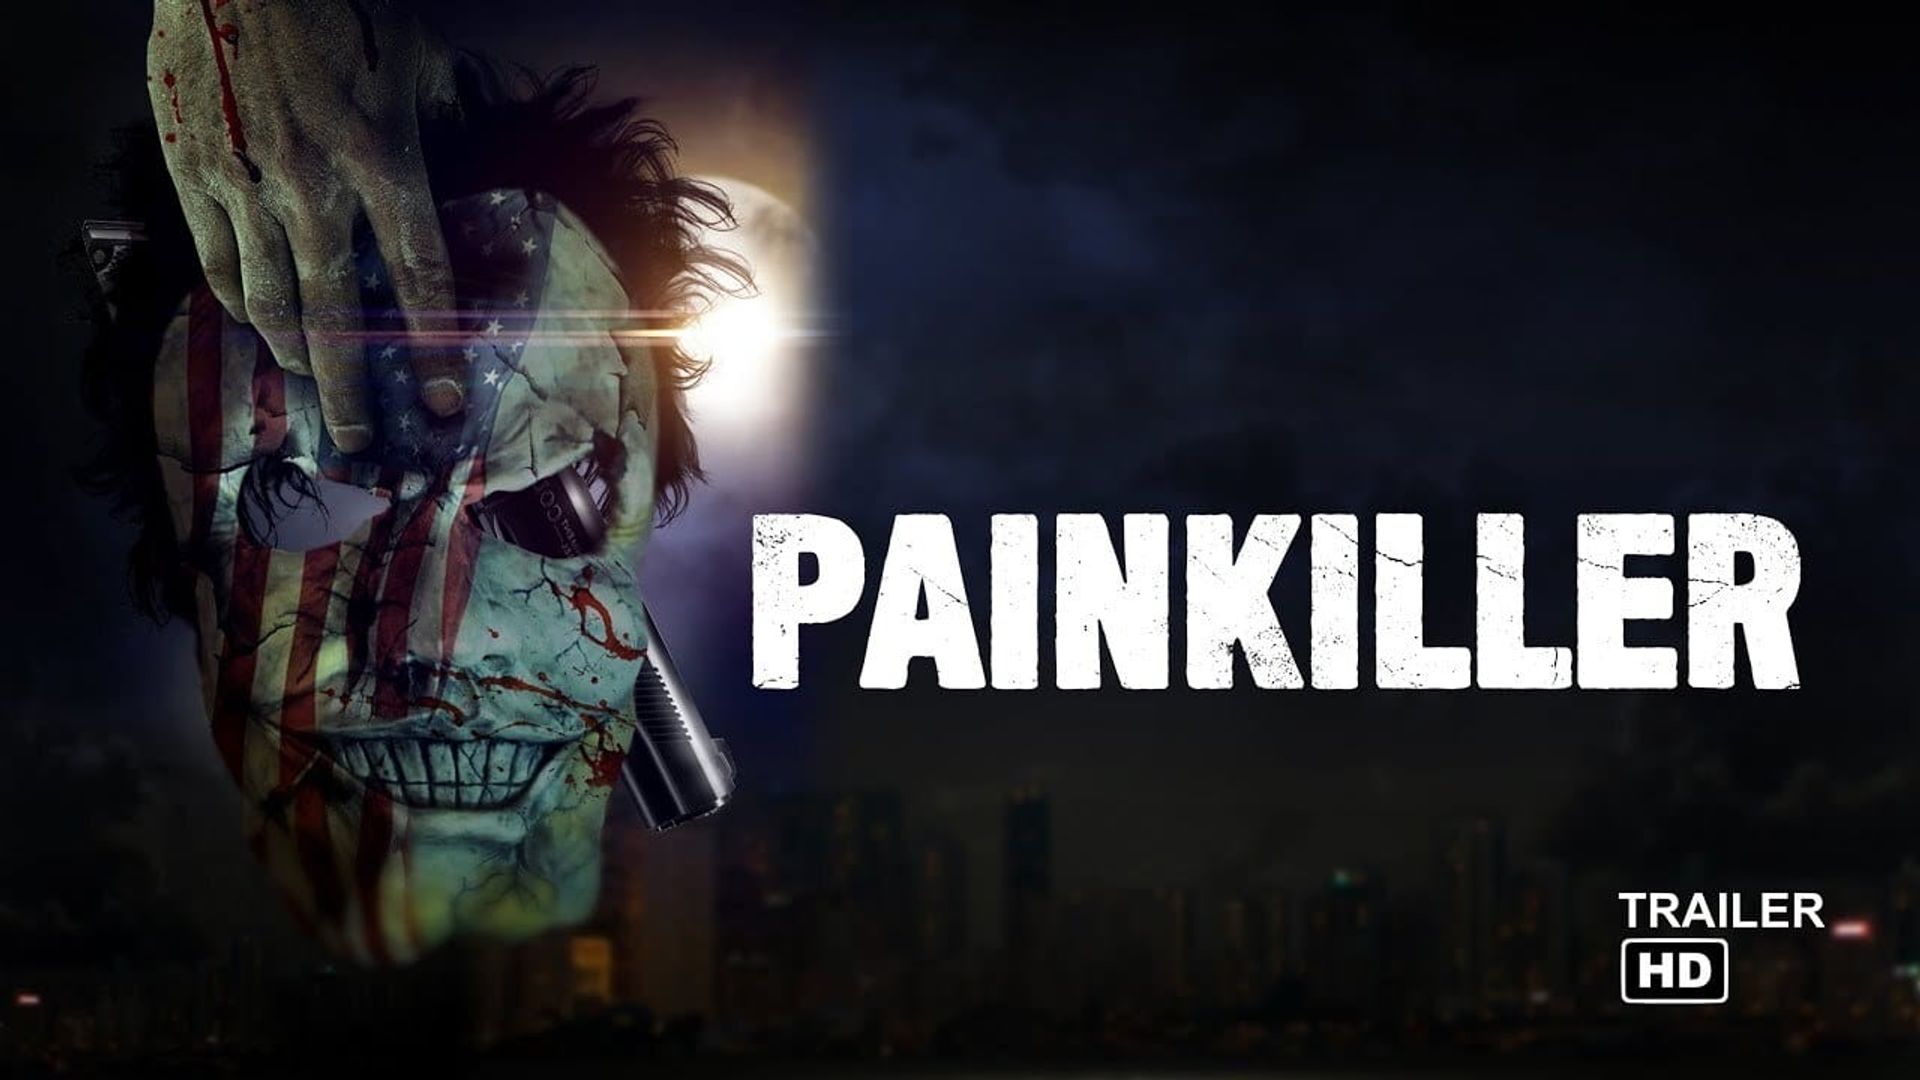 Painkiller background